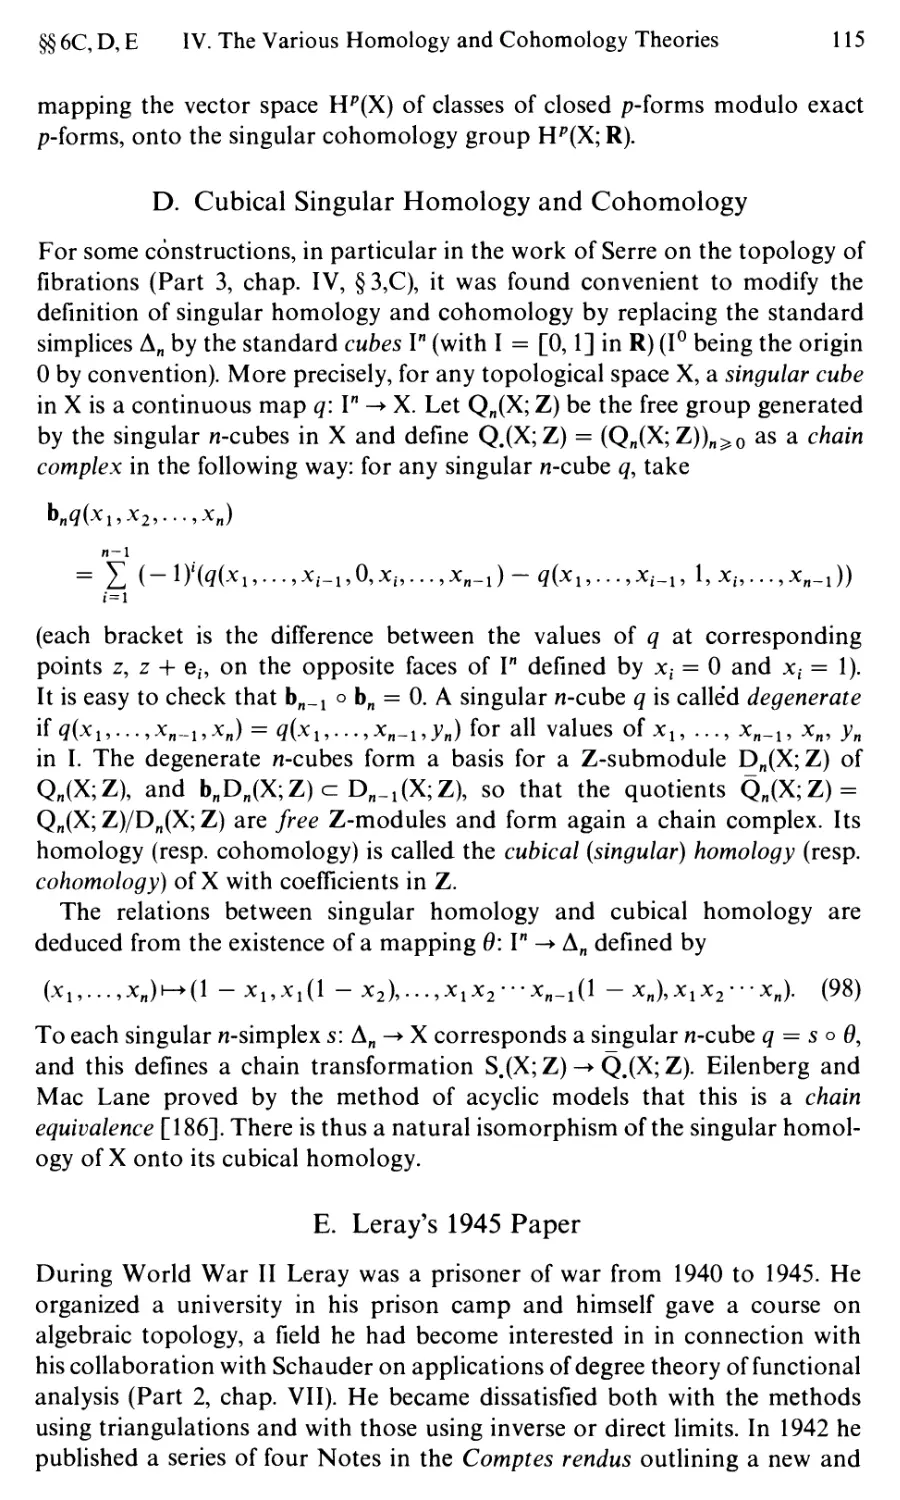 D. Cubical Singular Homology and Cohomology
E. Leray's 1945 Paper